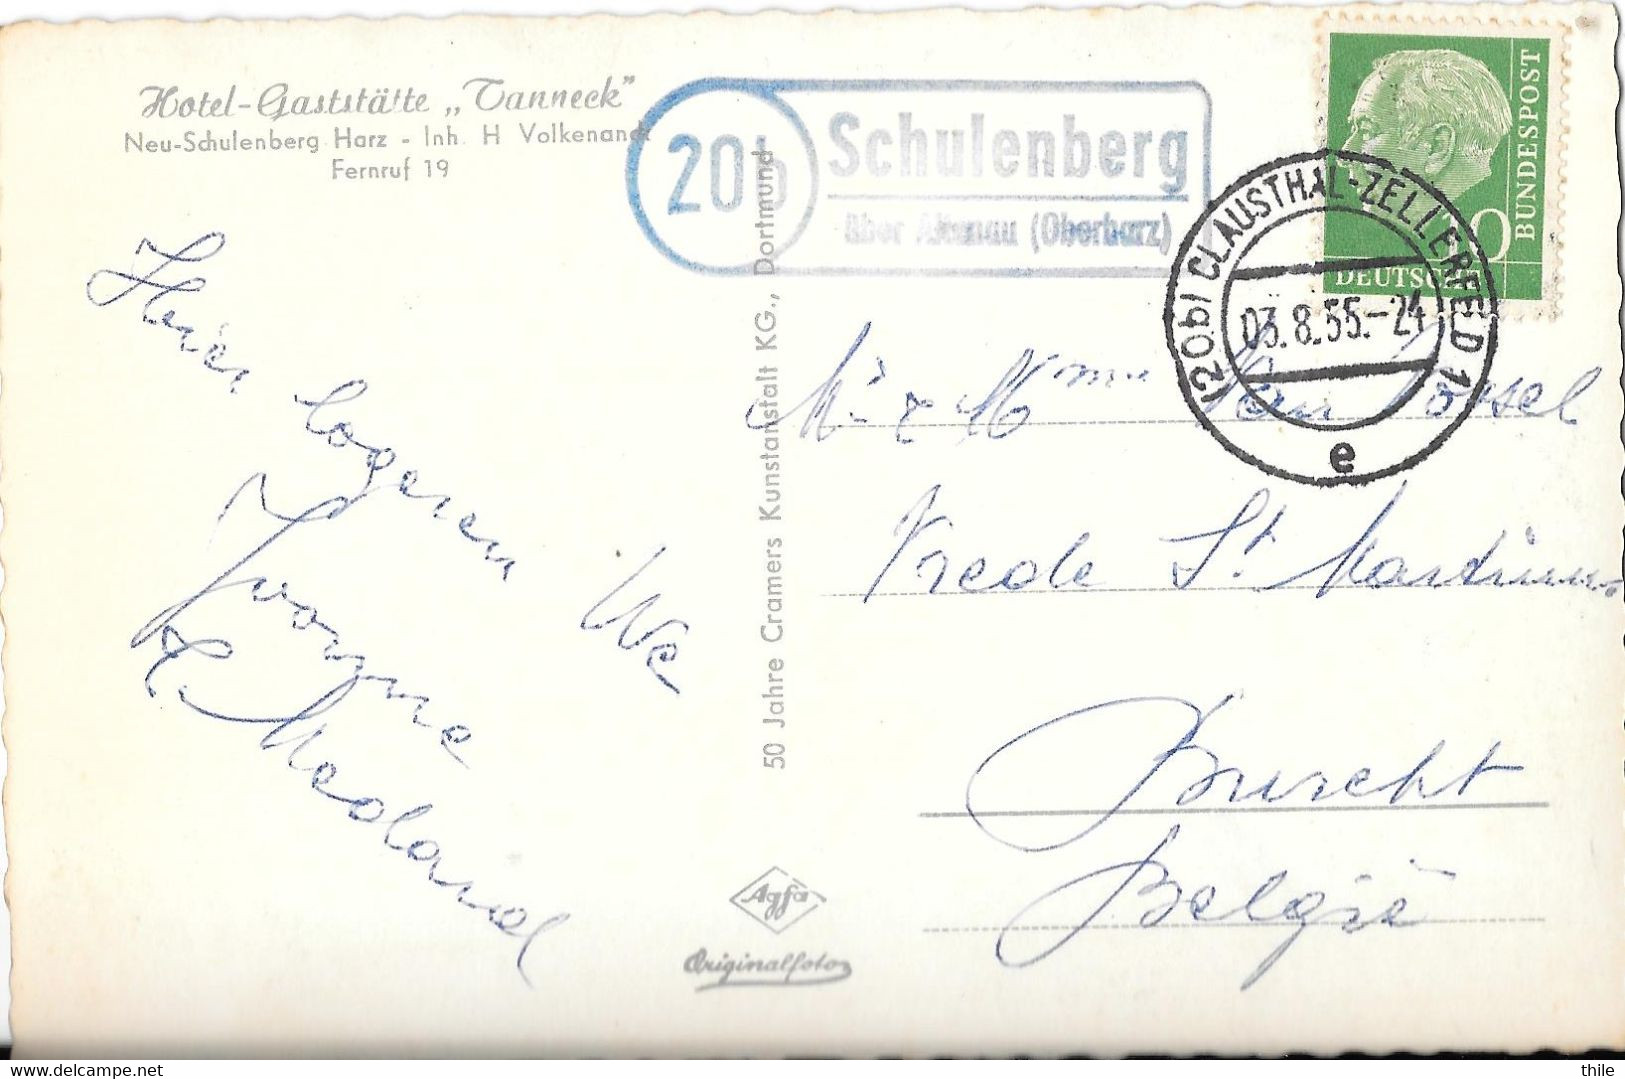 NEU-SCHULENBERG - Hotel-Gastätte "TANNECK" - 1955 - Oberharz